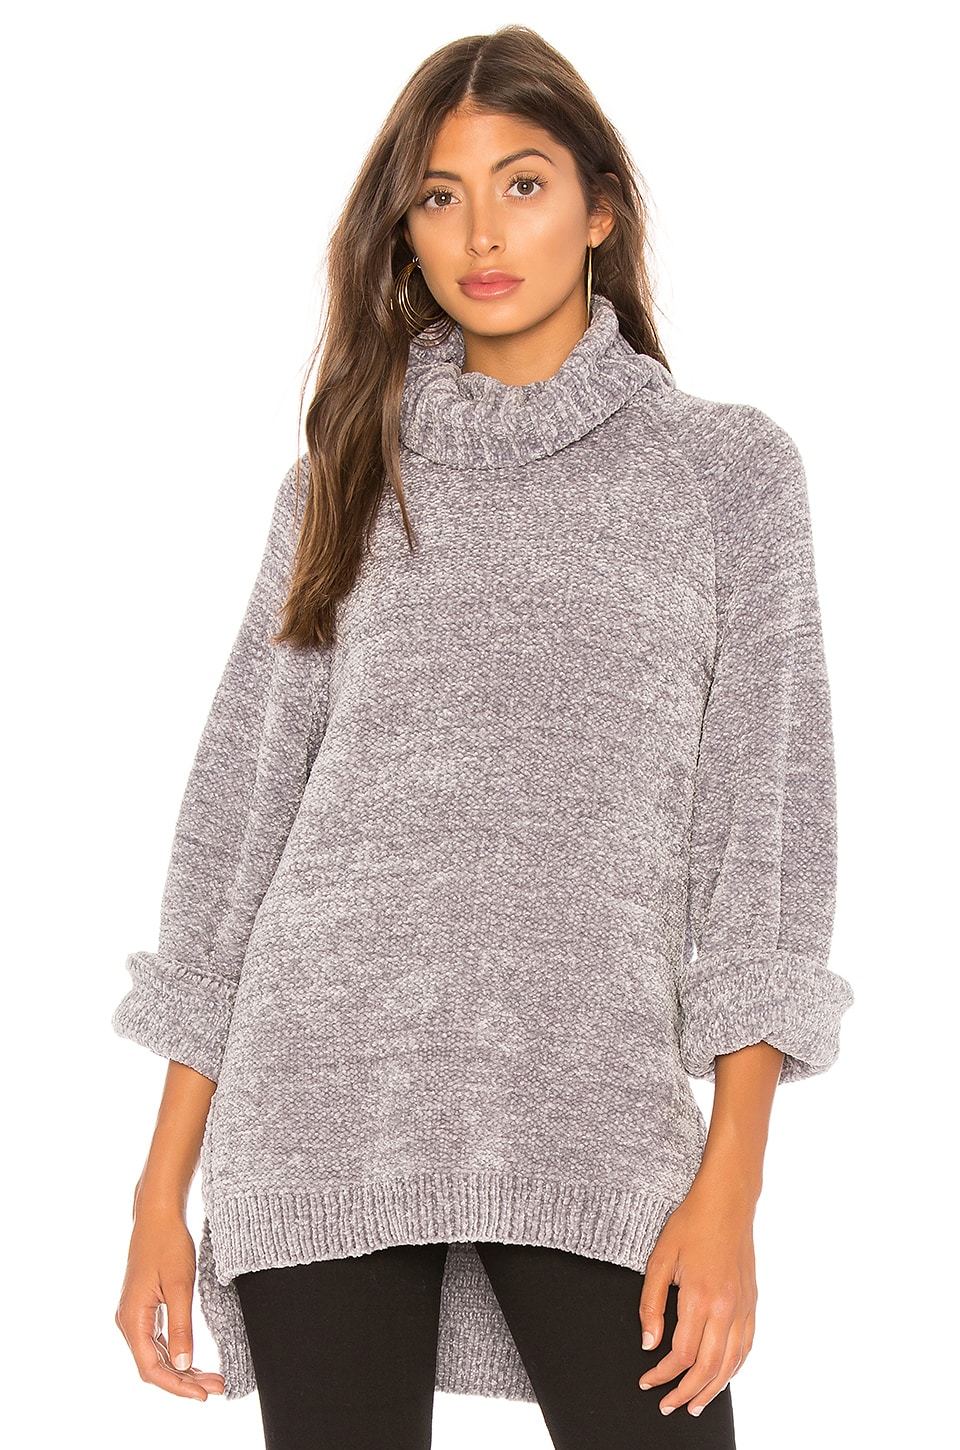 Tularosa Payson Chenille Sweater in Gray